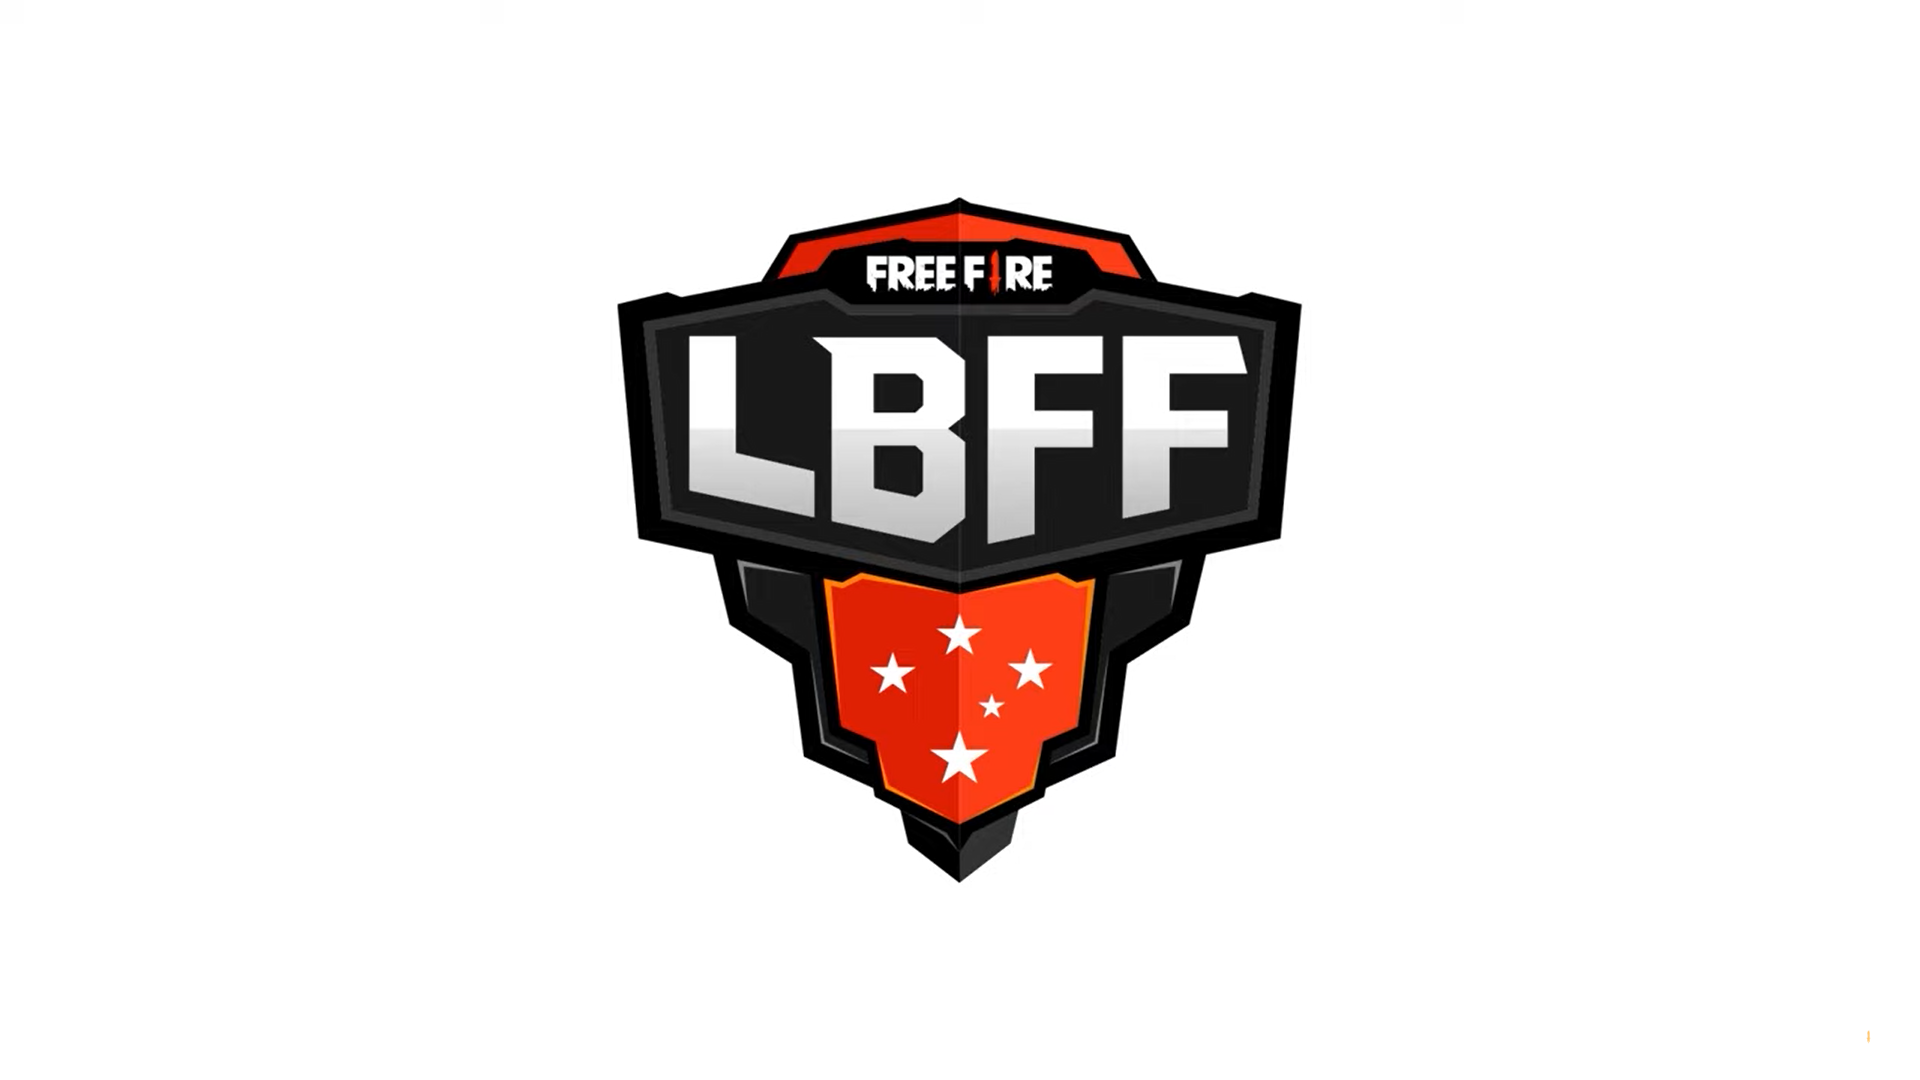 Free Fire Esports BR #LBFF